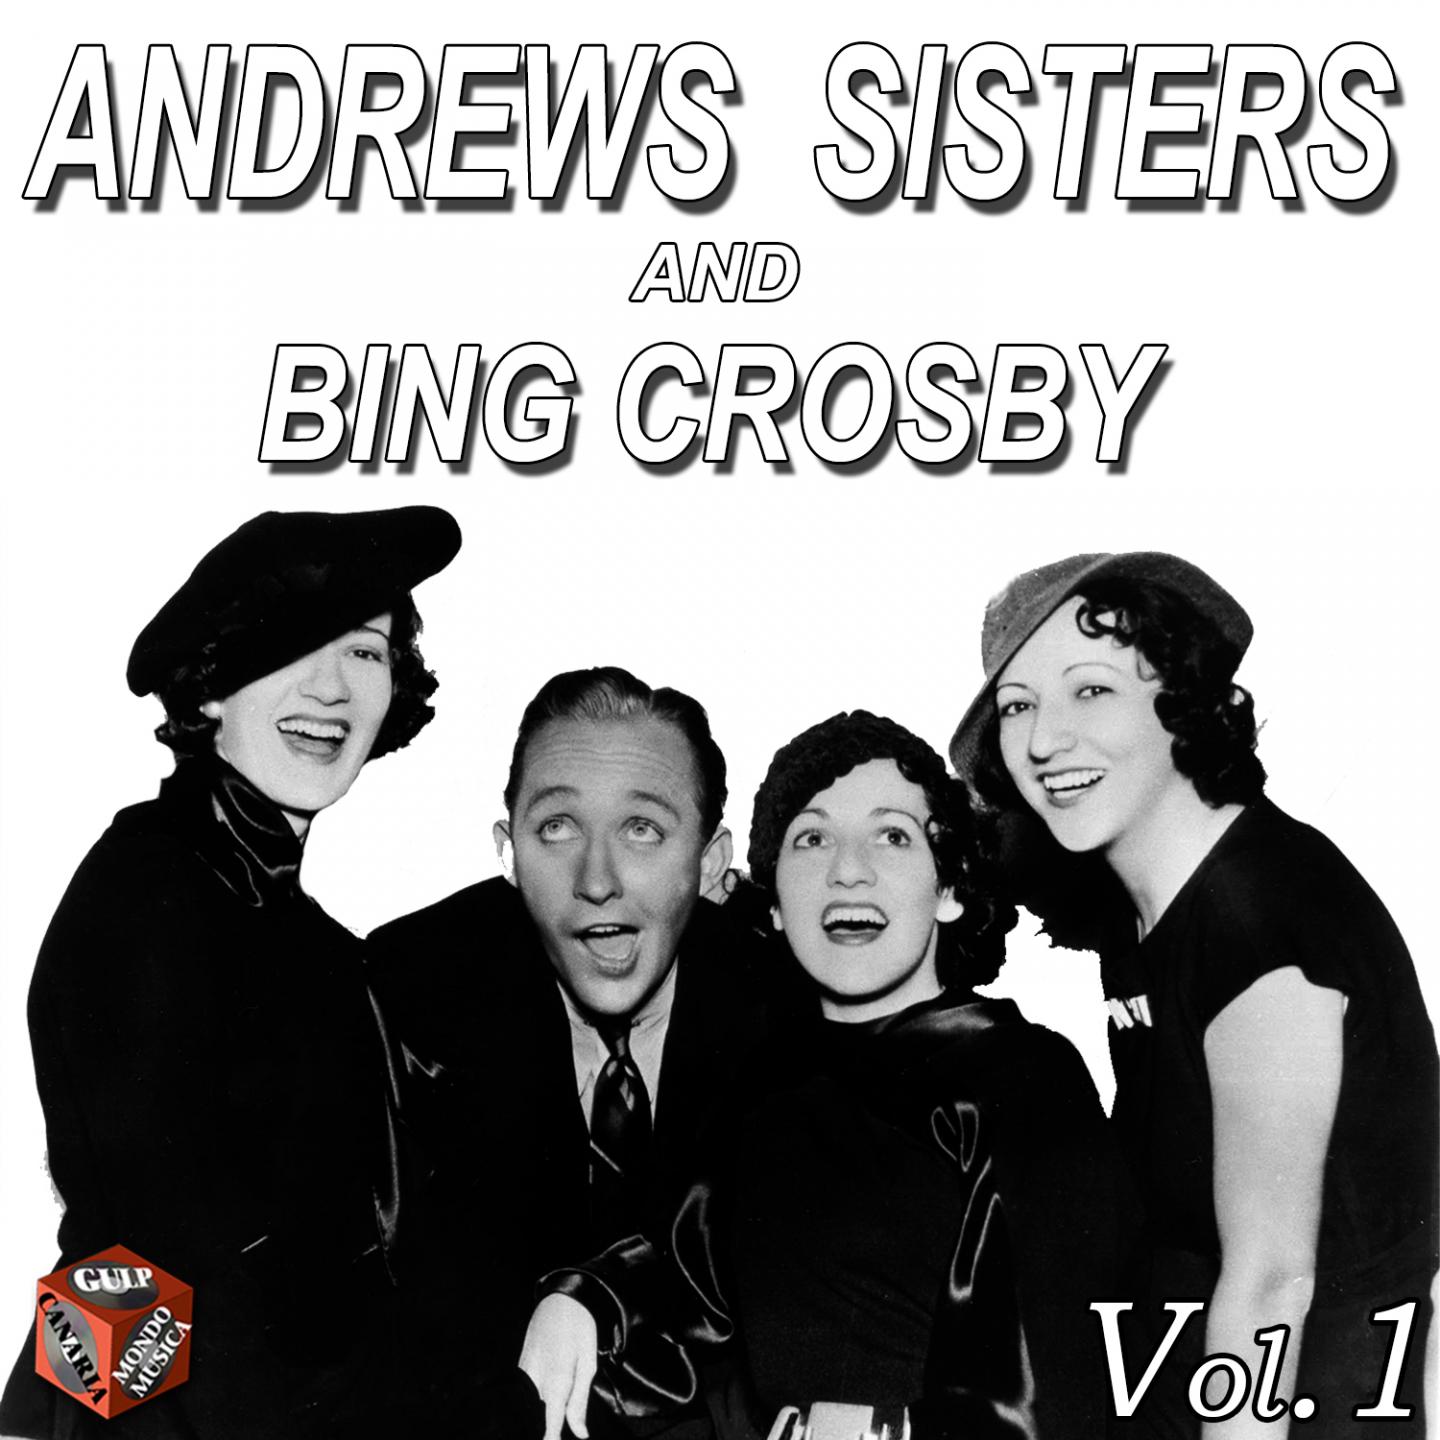 Andrews Sisters and Bing Crosby, Vol. 1